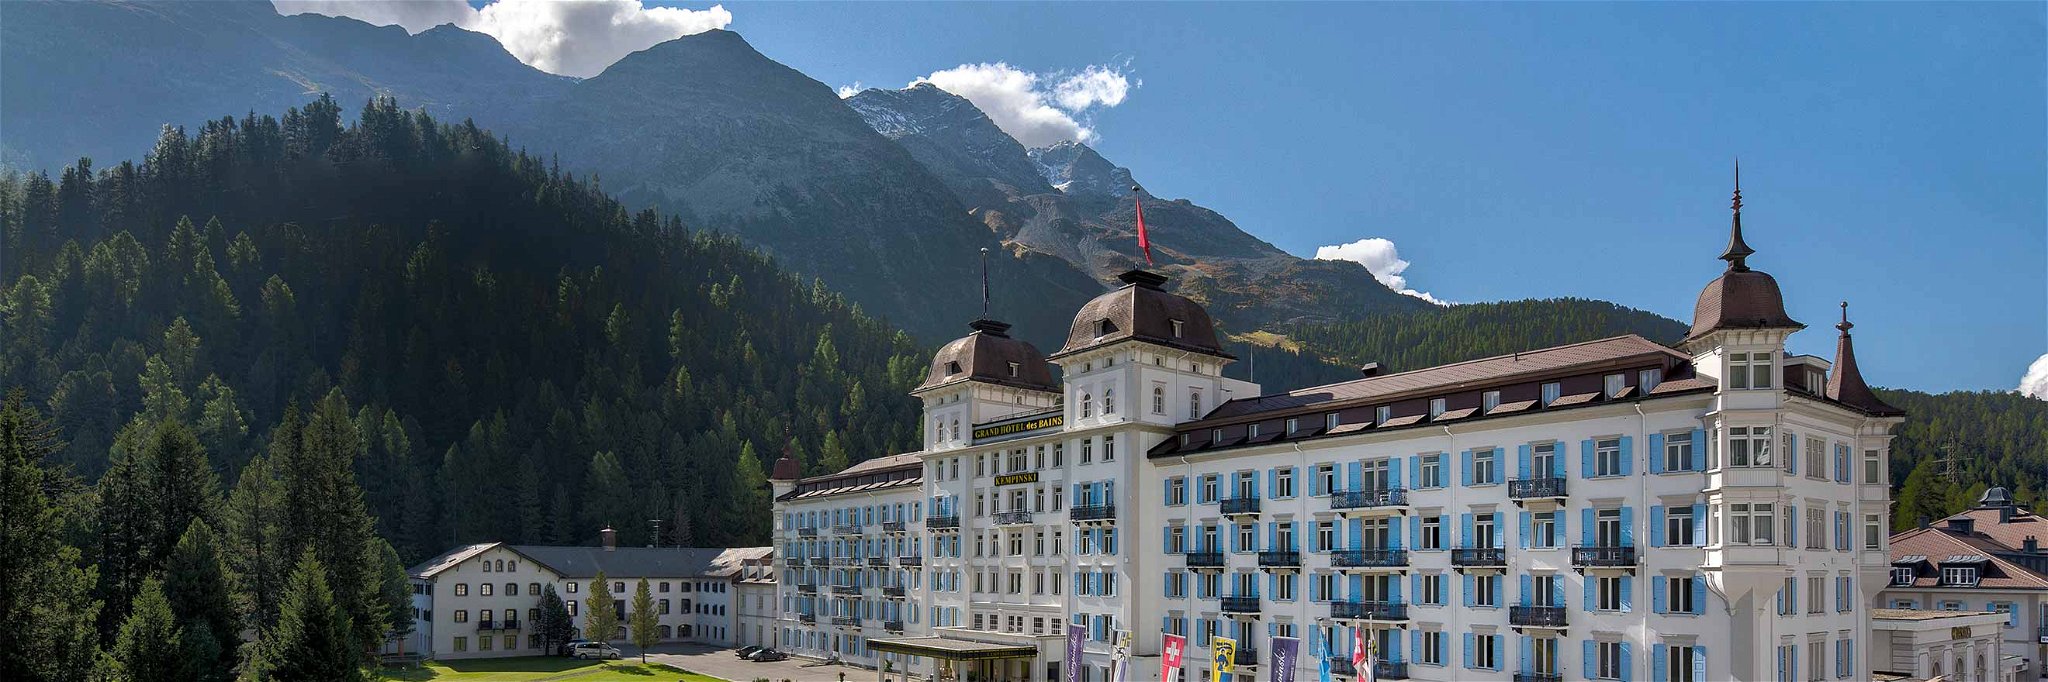 Das «Grand Hotel des Bains Kempinski» in St. Moritz